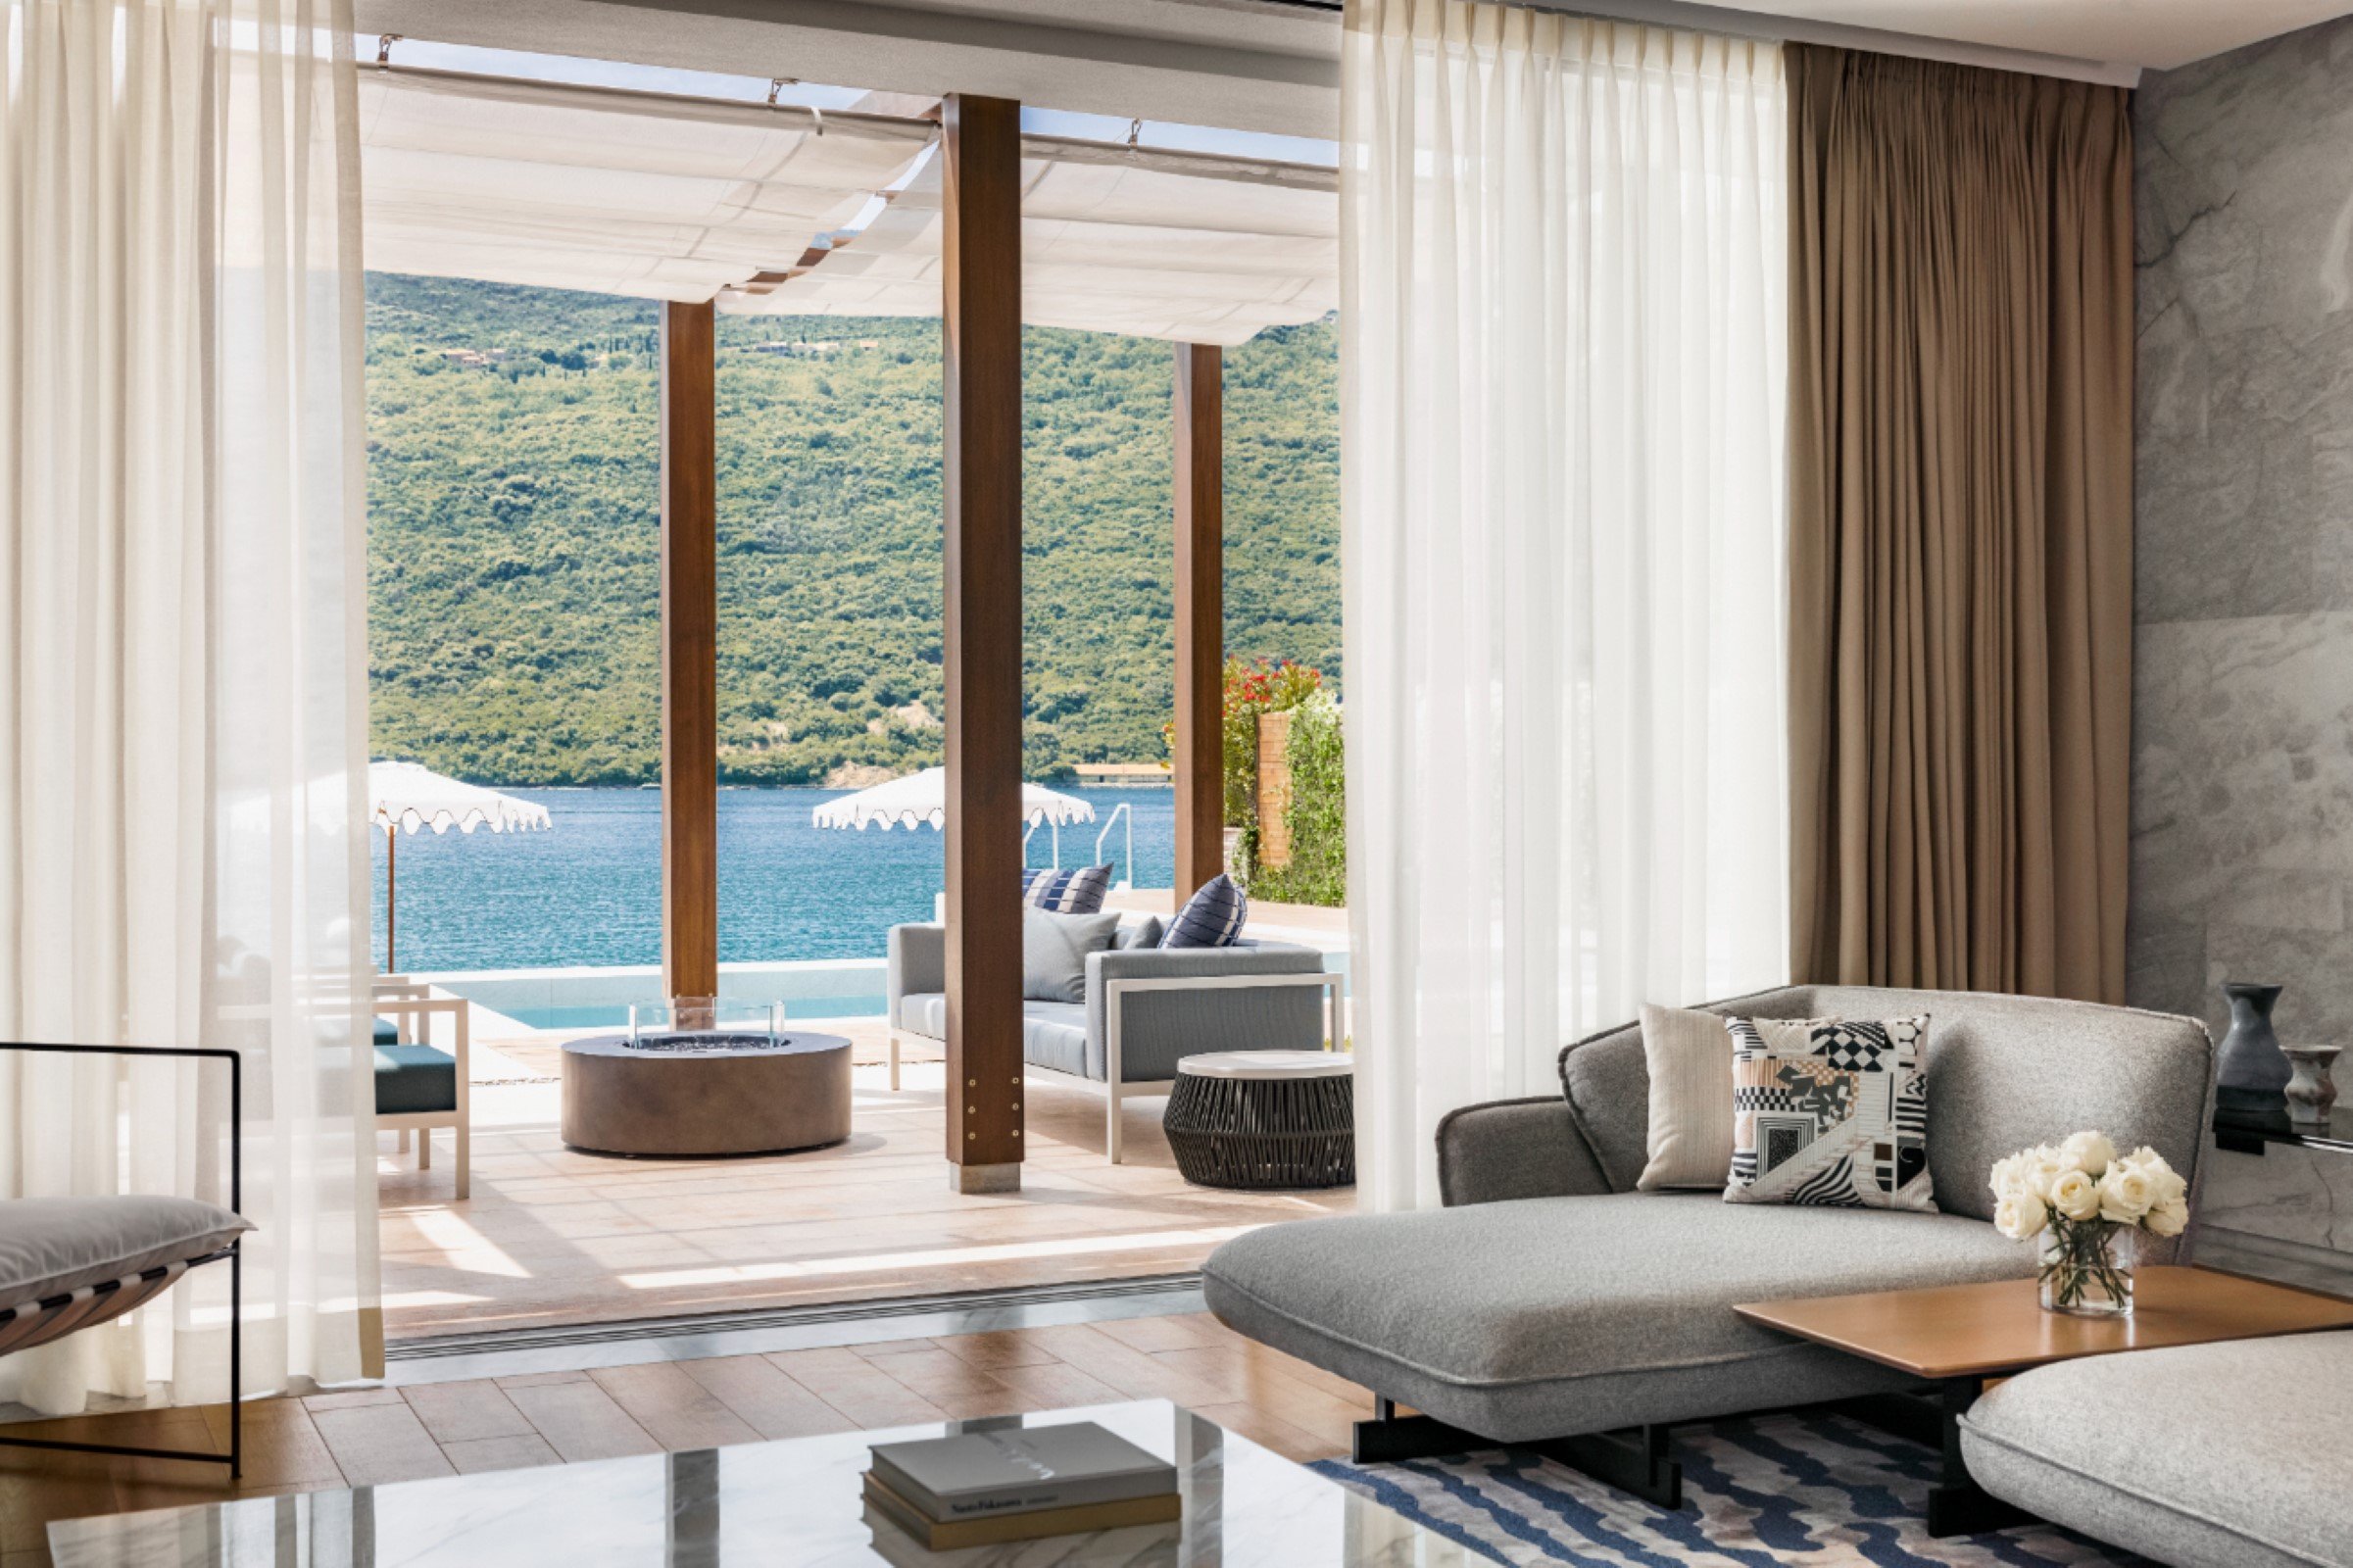 Francis York Exclusive OneOnly Waterfront Villa in Portonovi, Montenegro 3.jpg